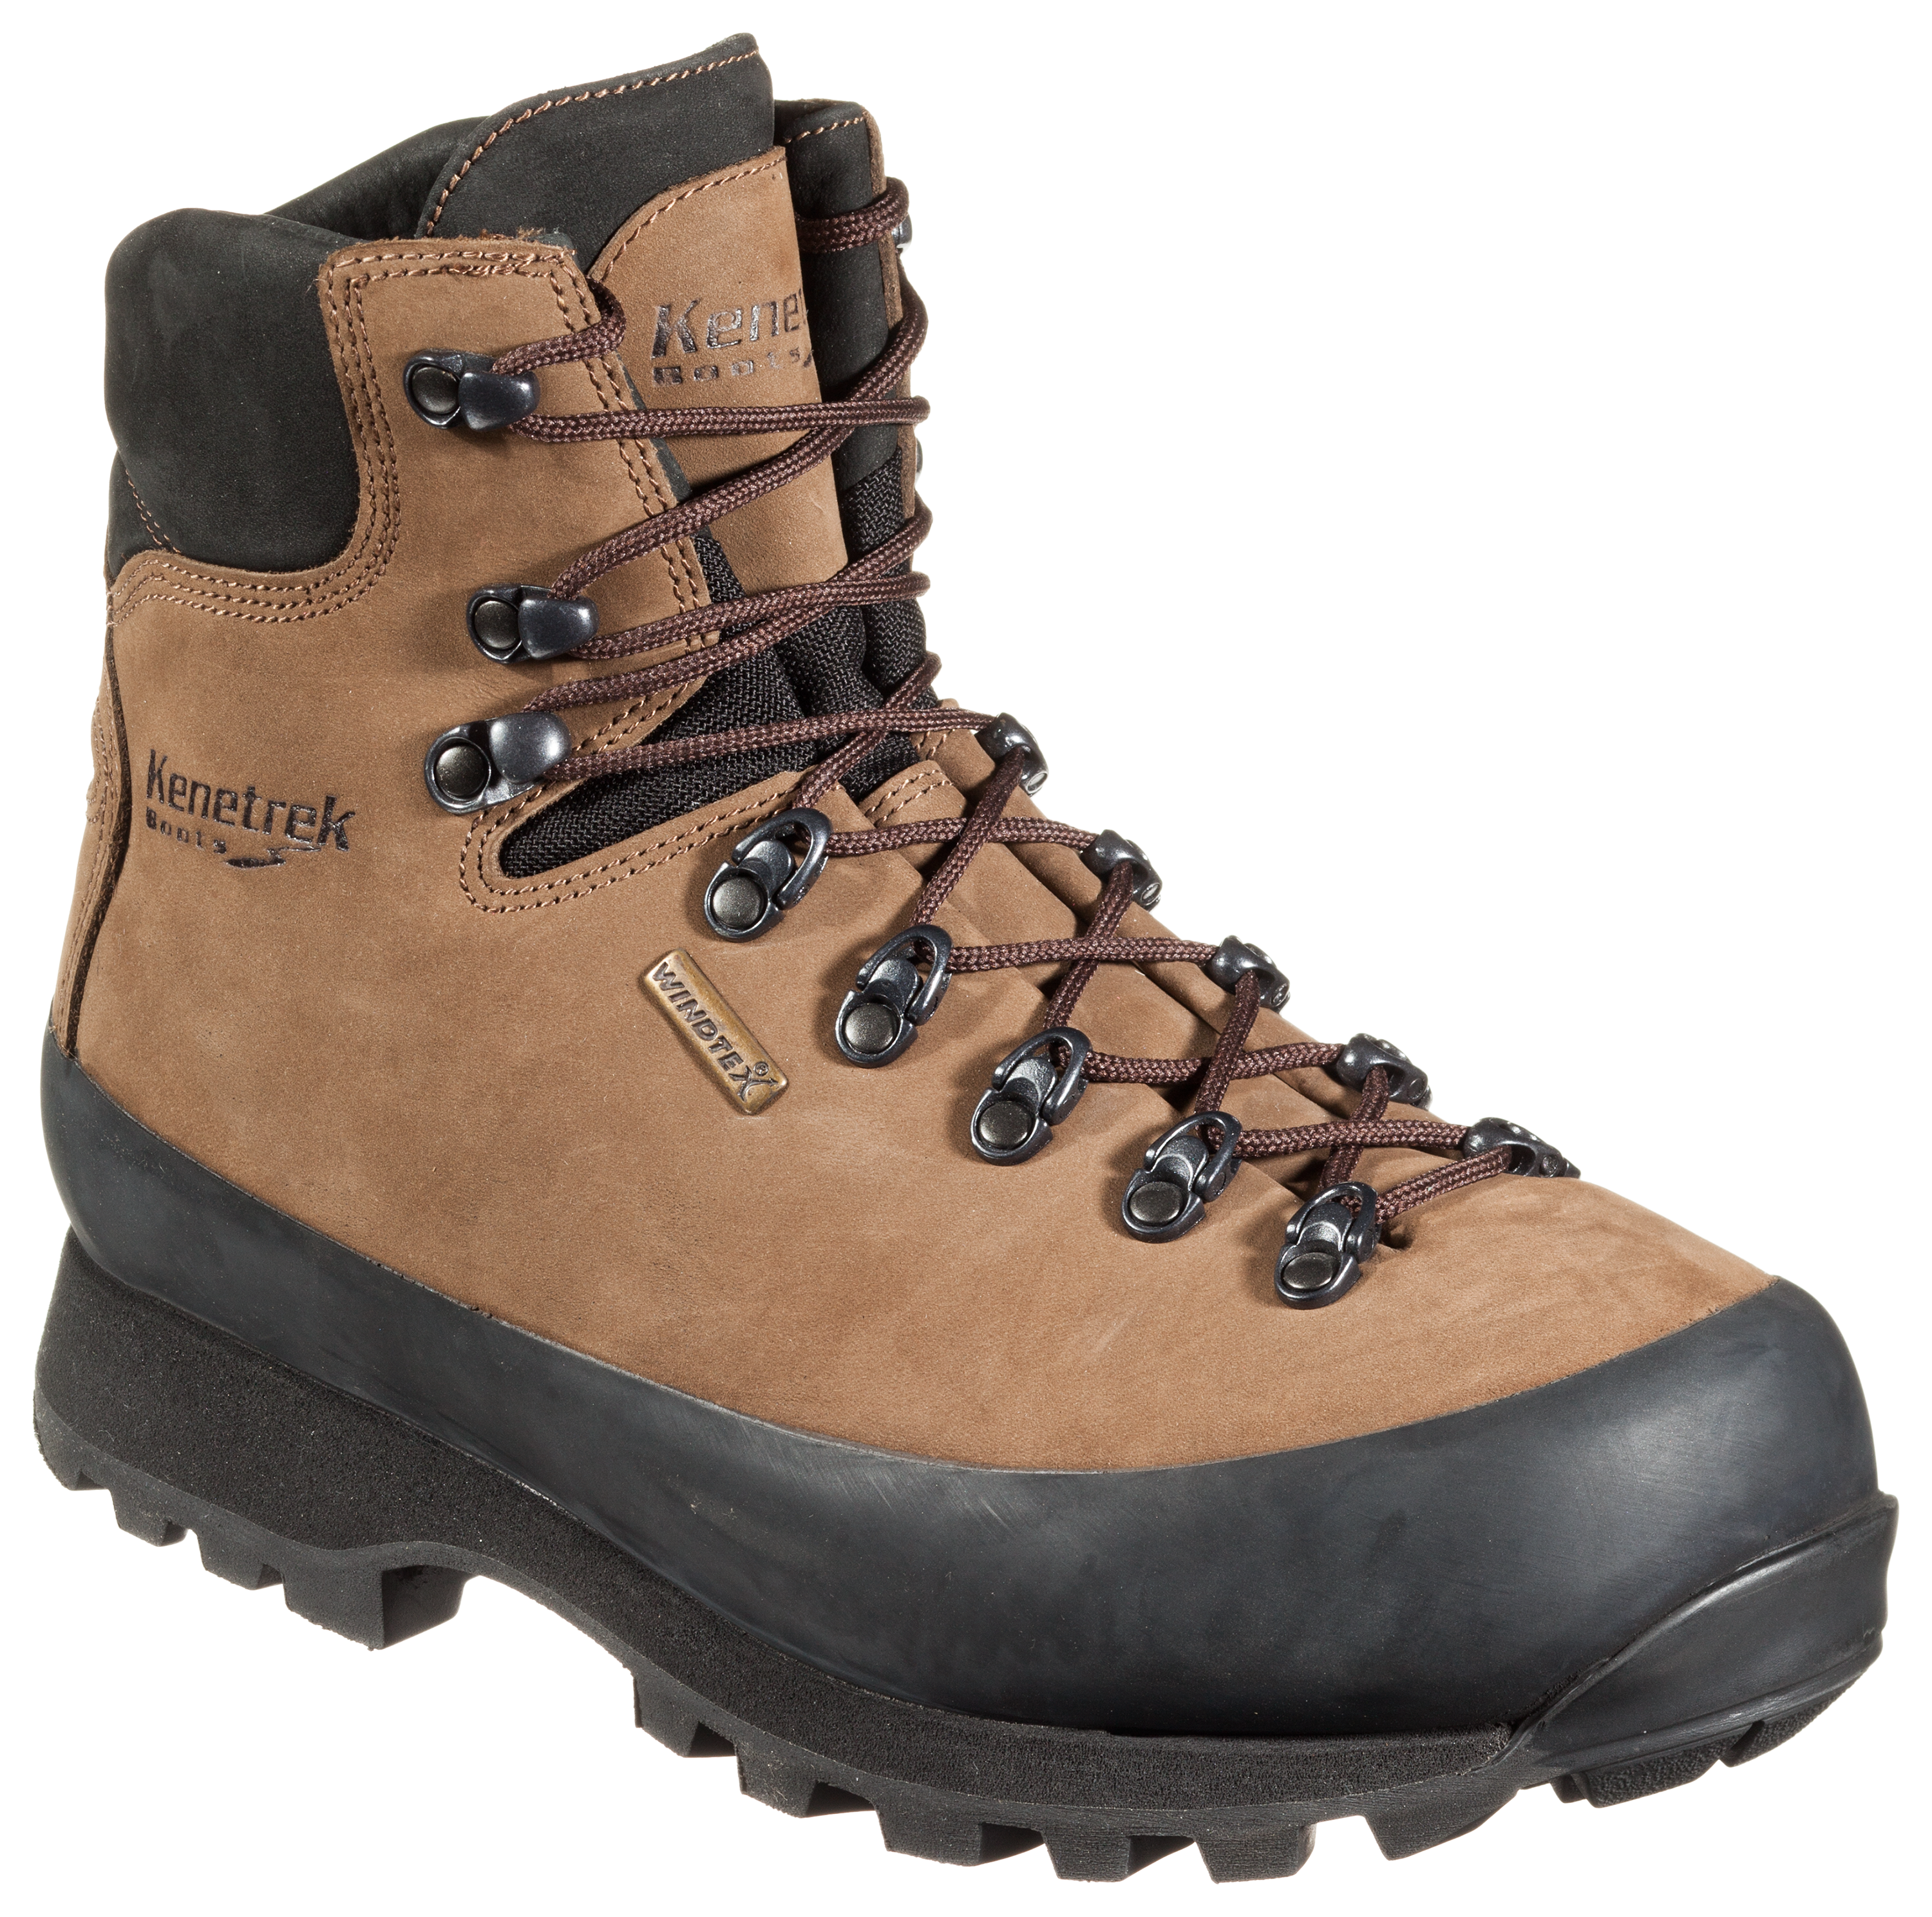 Kenetrek Hardscrabble Waterproof Hiking Boots for Men - Brown - 9M